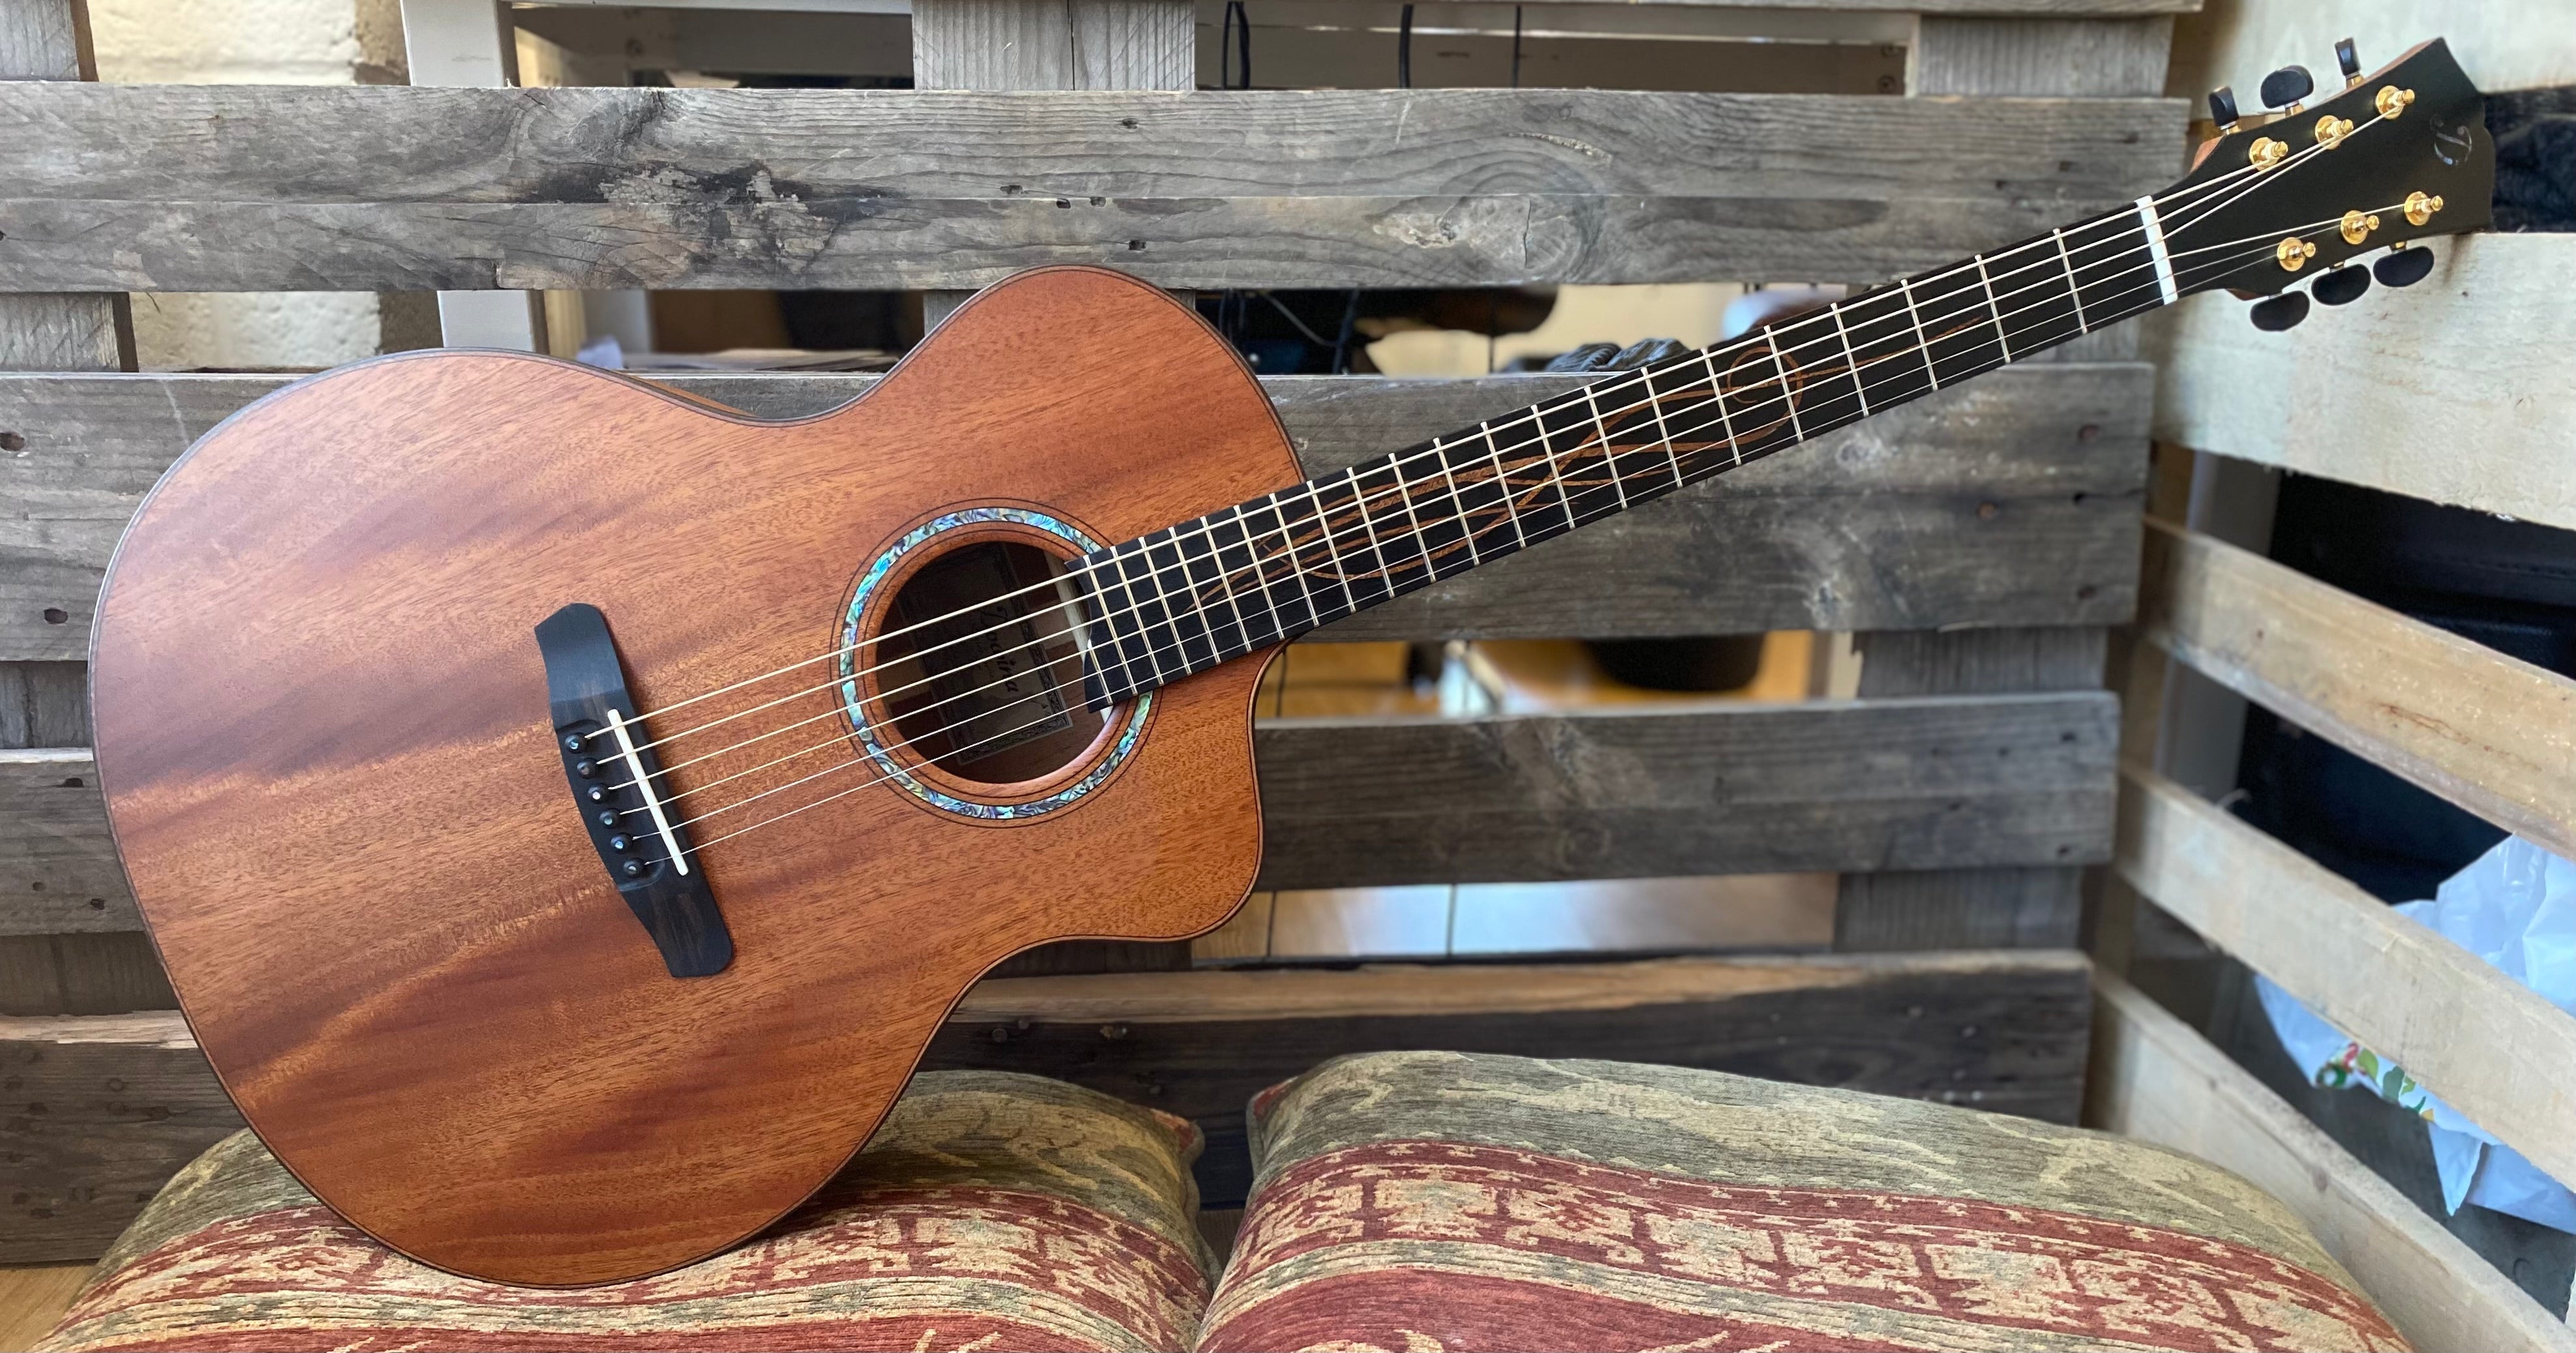 Dowina Tribute To Honduran Mahogany GAC (15+ years old) Deluxe Custom, Acoustic Guitar for sale at Richards Guitars.